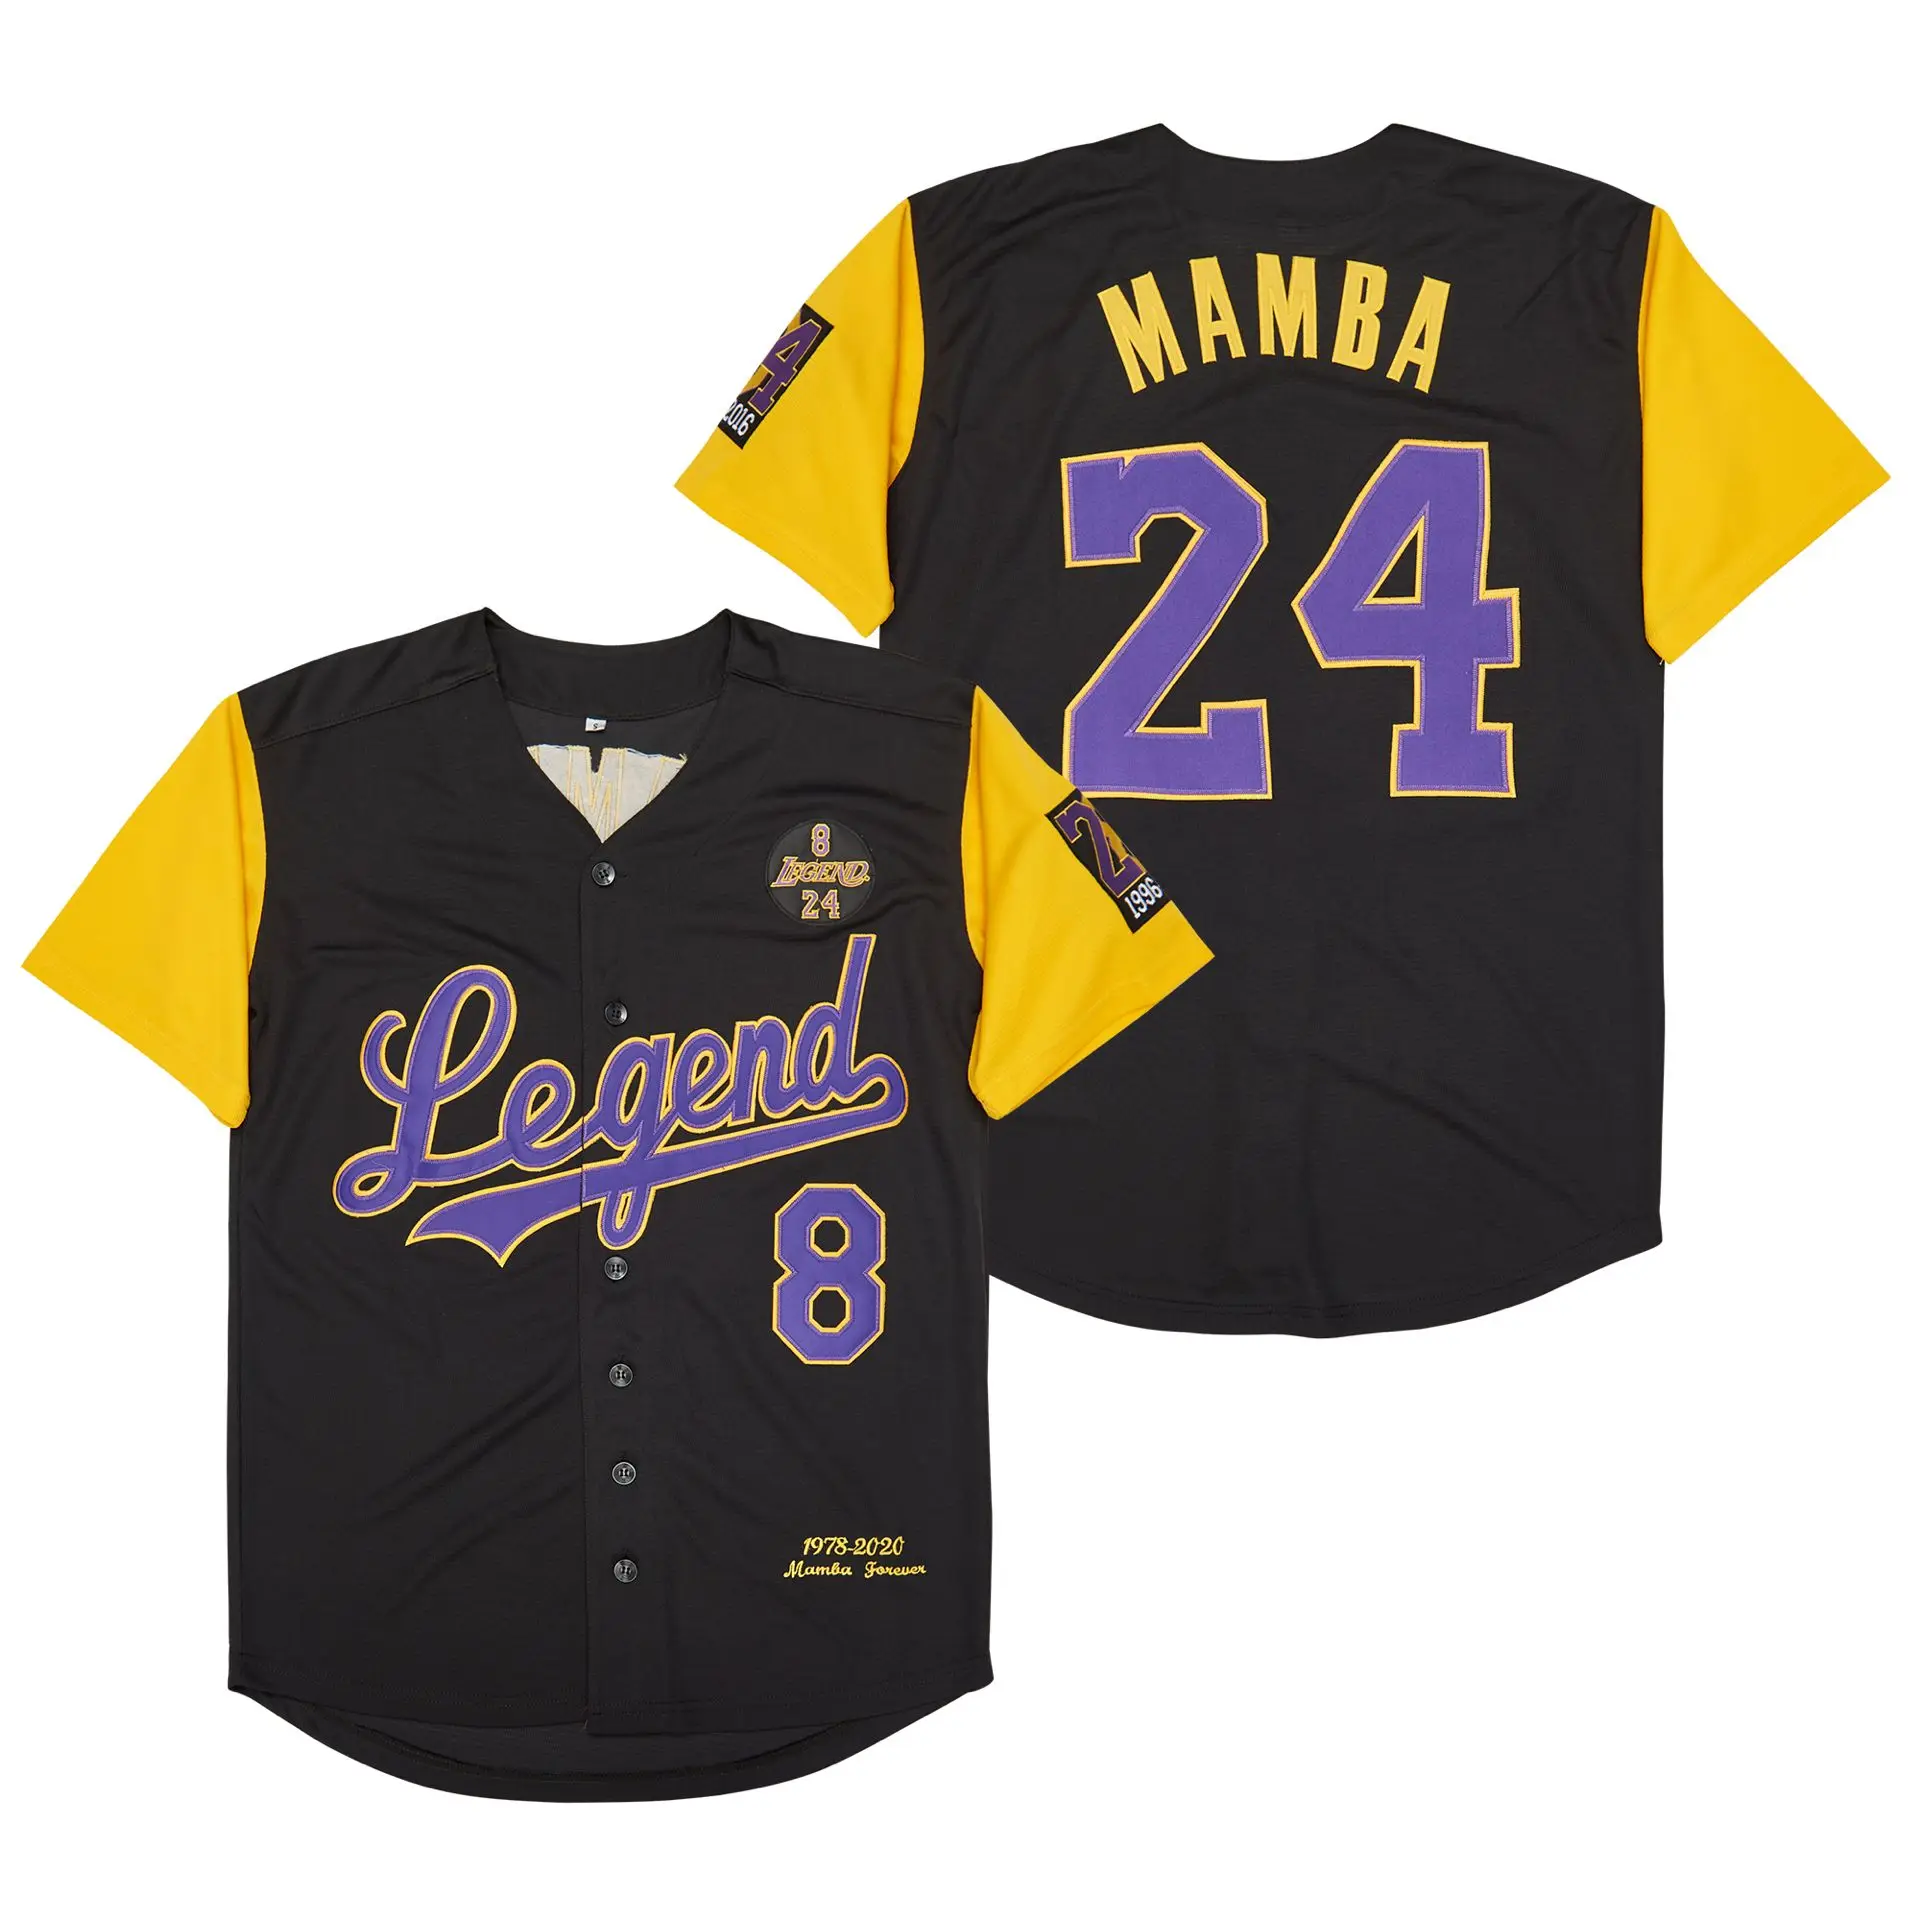 

Retro Legend Mamba 8 24 Yellow Sleeve 1996-2016 1978-2020 Baseball Jersey For Men Women Kids, Custom accepted